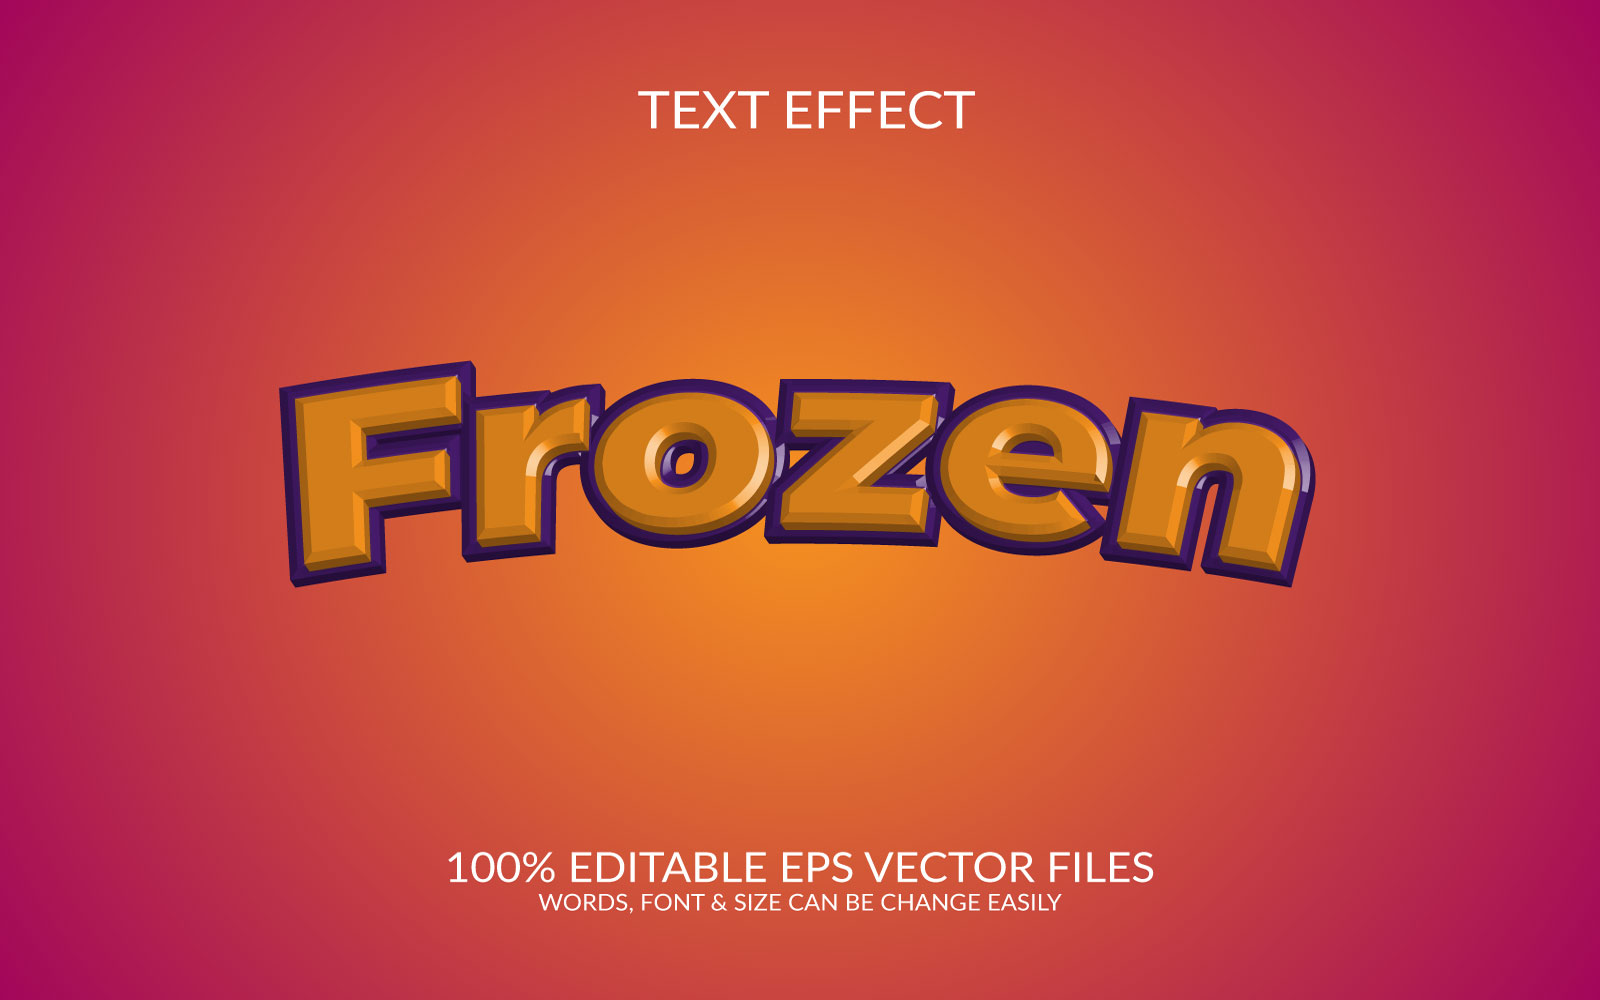 Frozen vector eps 3d text effect design.